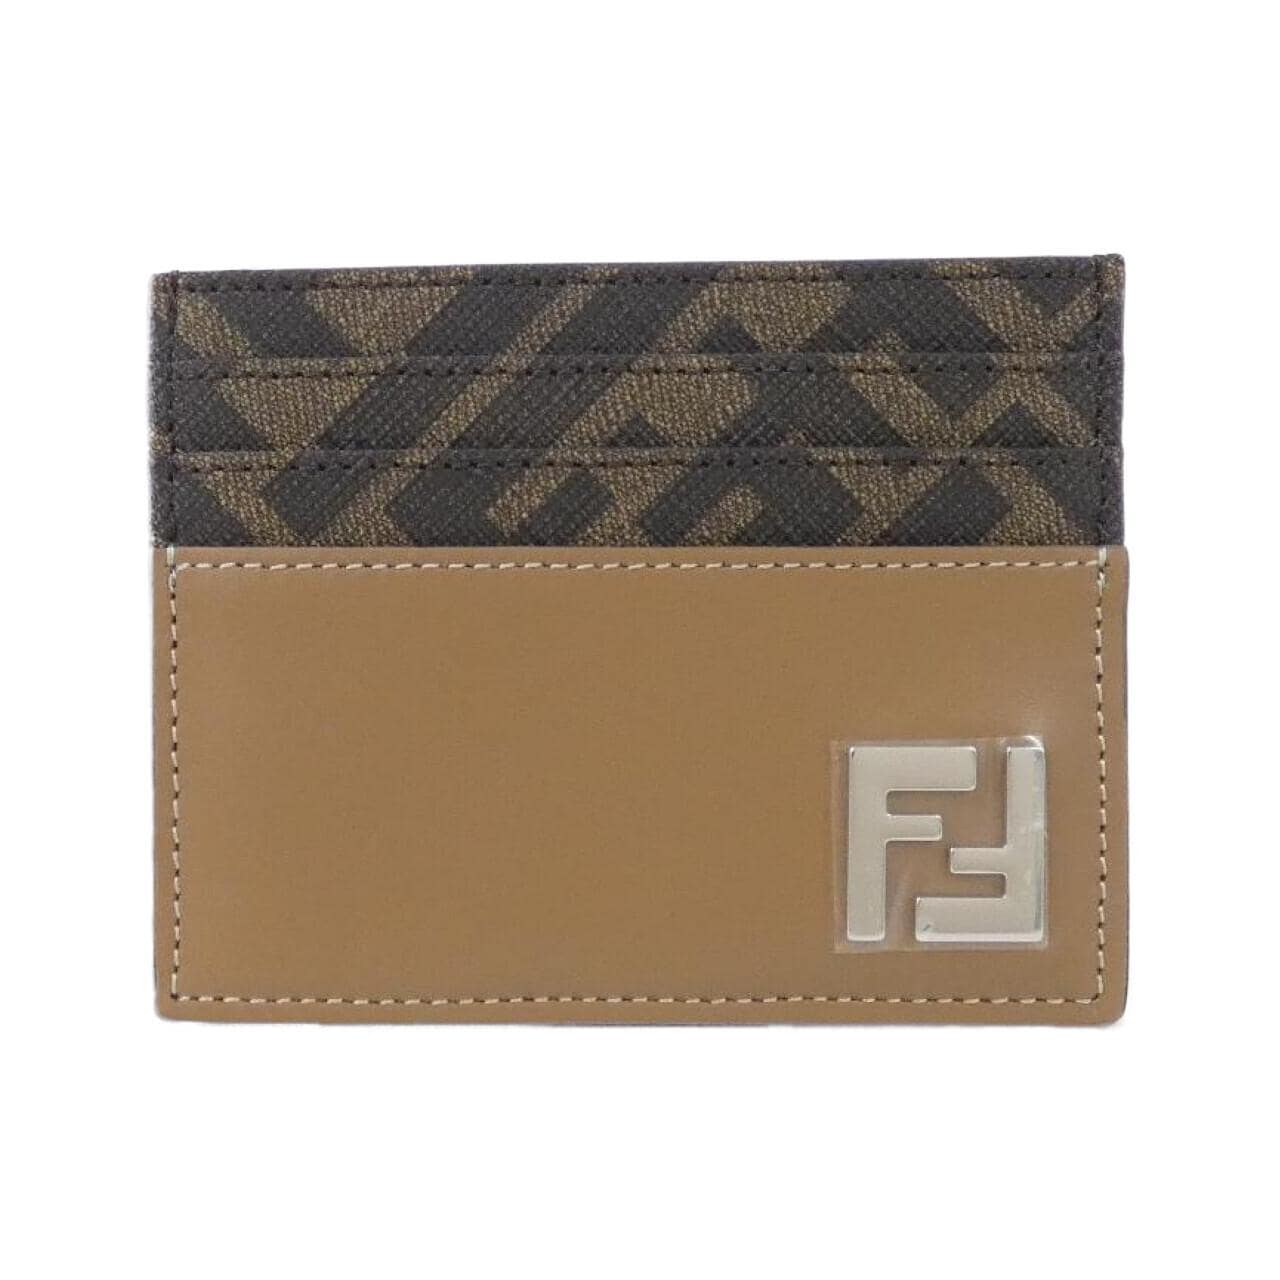 [新品] FENDI 7M0164 AFF2 卡包